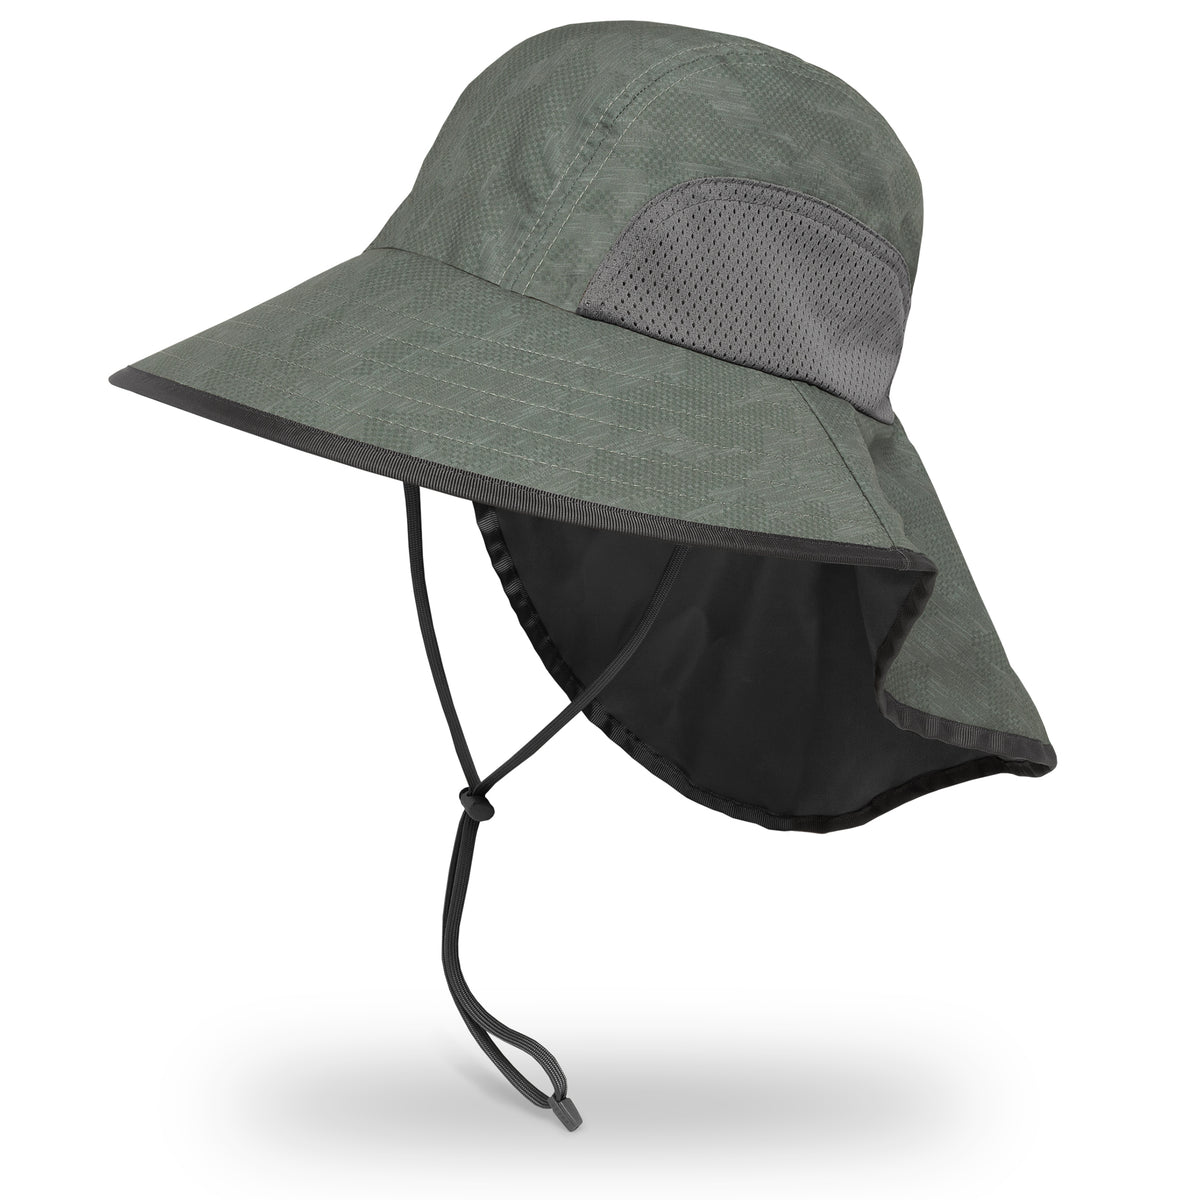 Top Headwear Safari Explorer Bucket Hat With Flap Neck Cover - Beige, Large